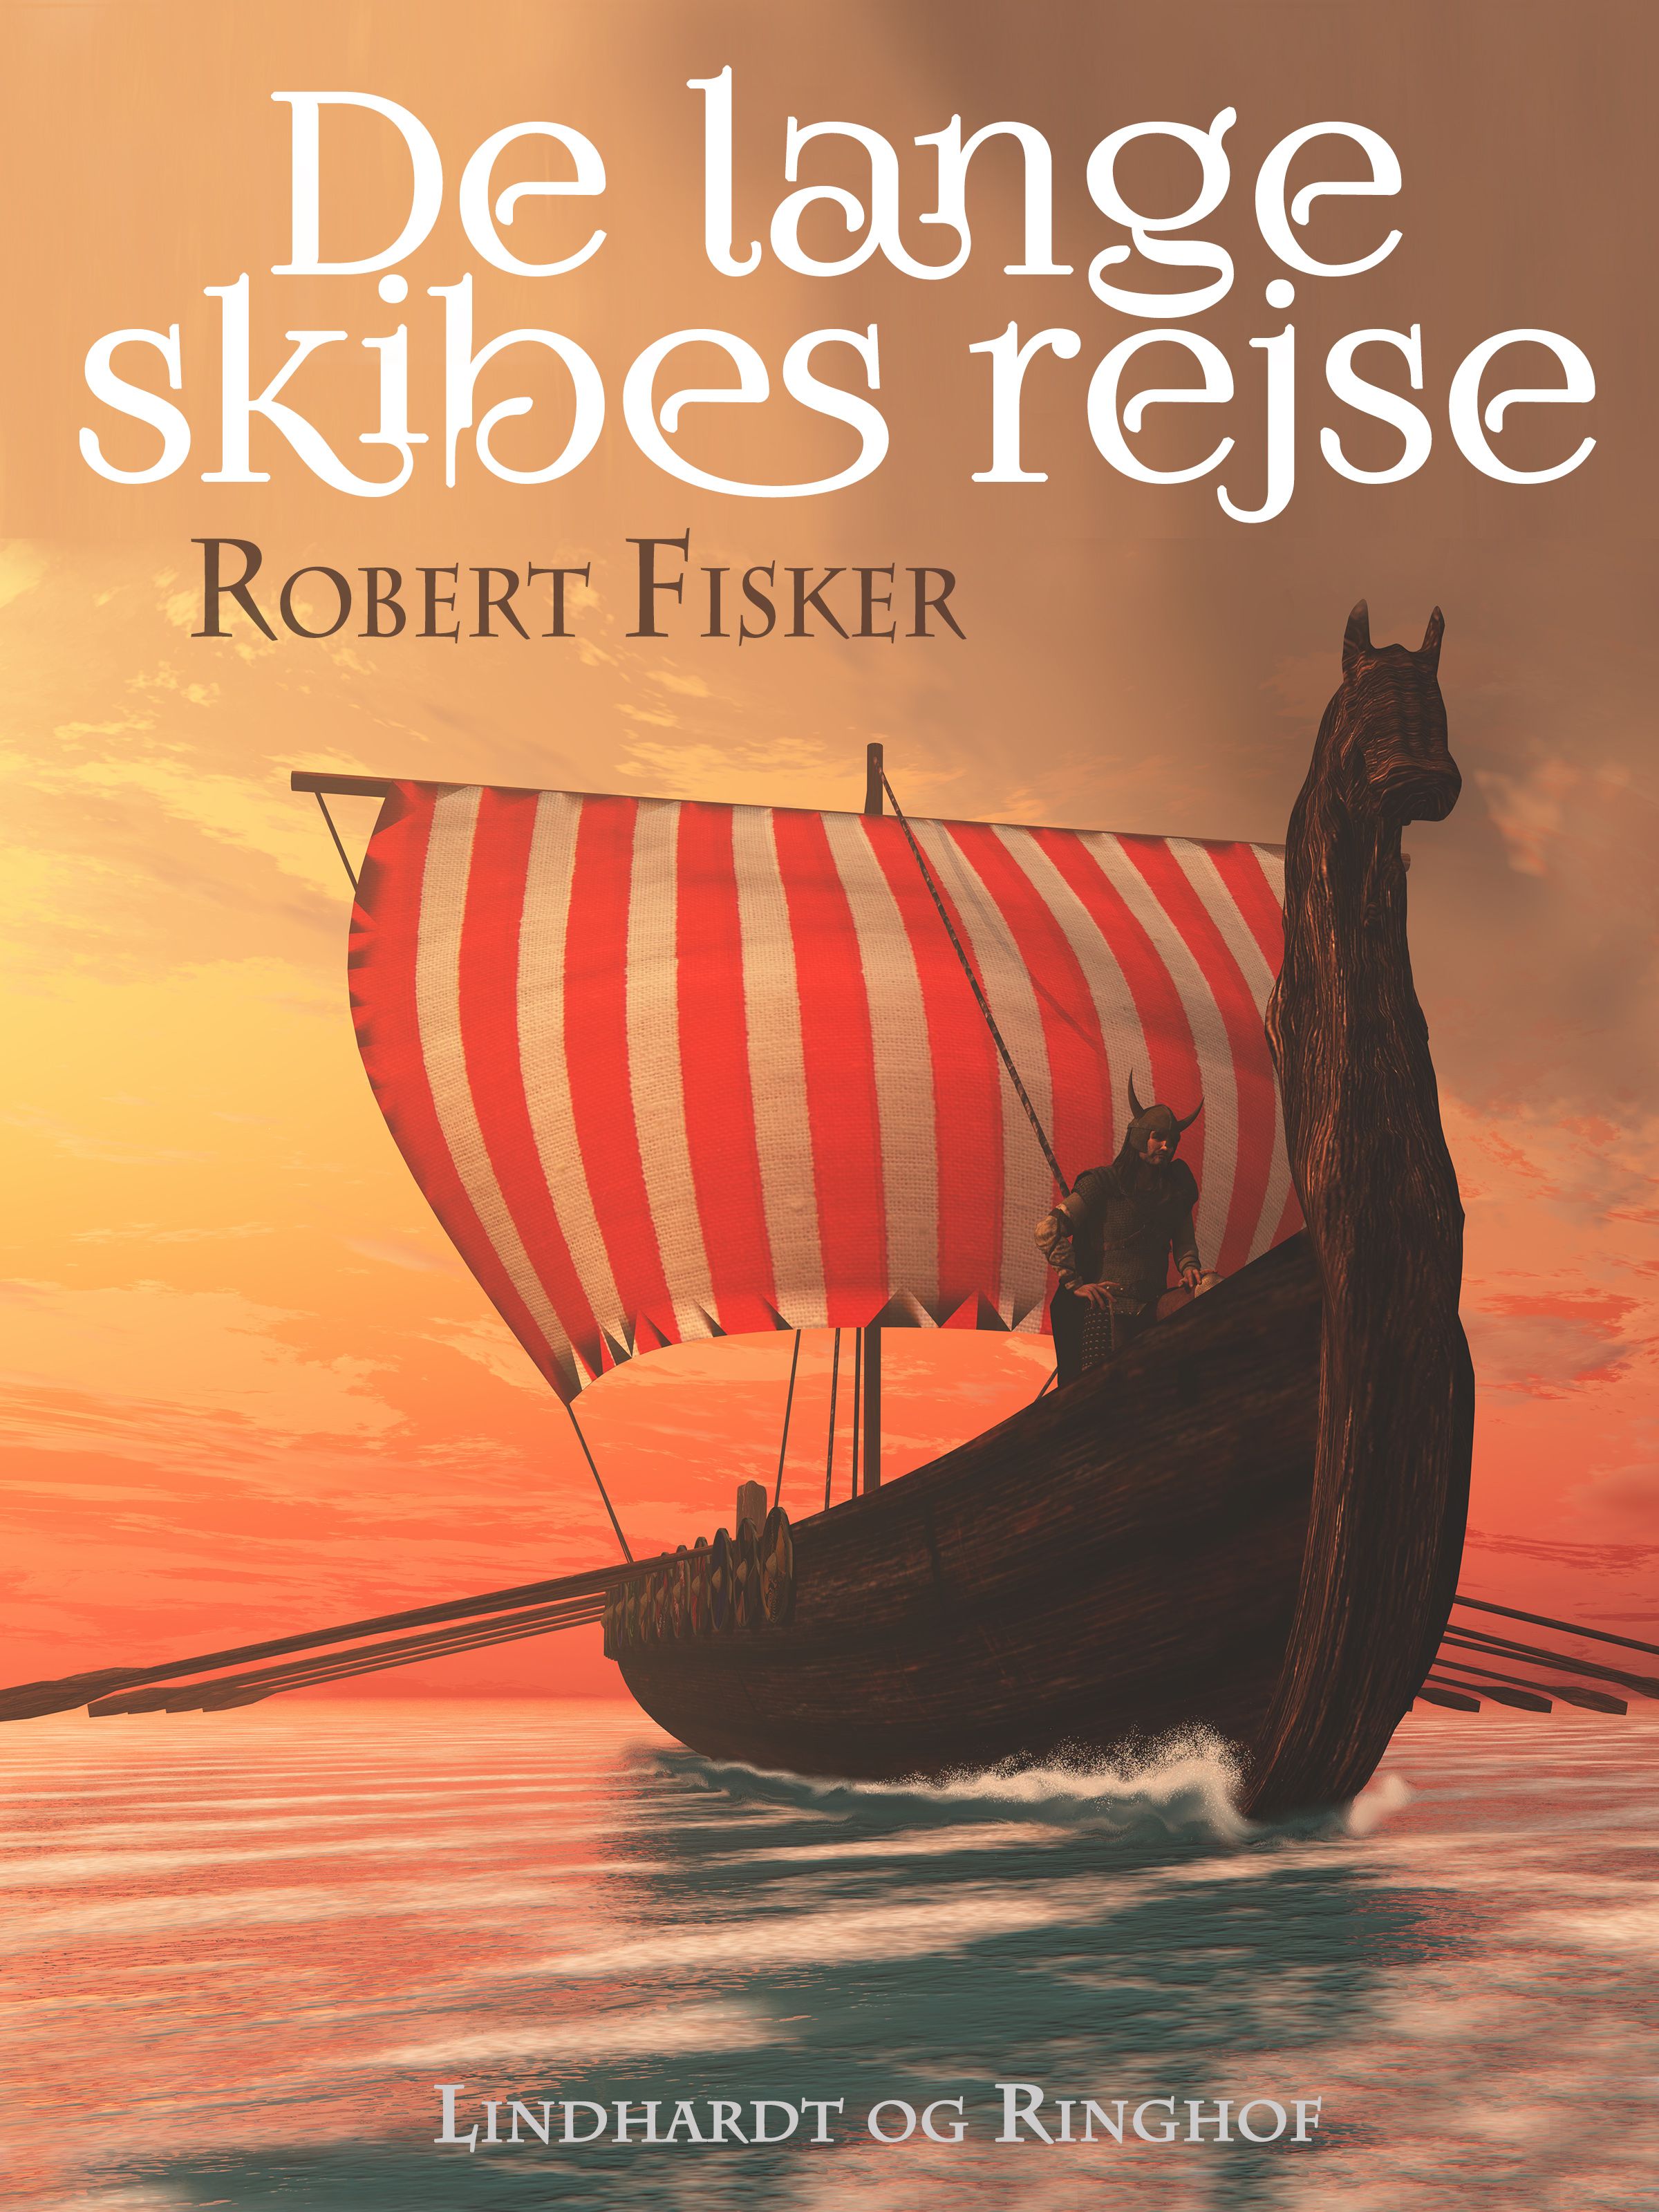 De lange skibes rejse, eBook by Robert Fisker